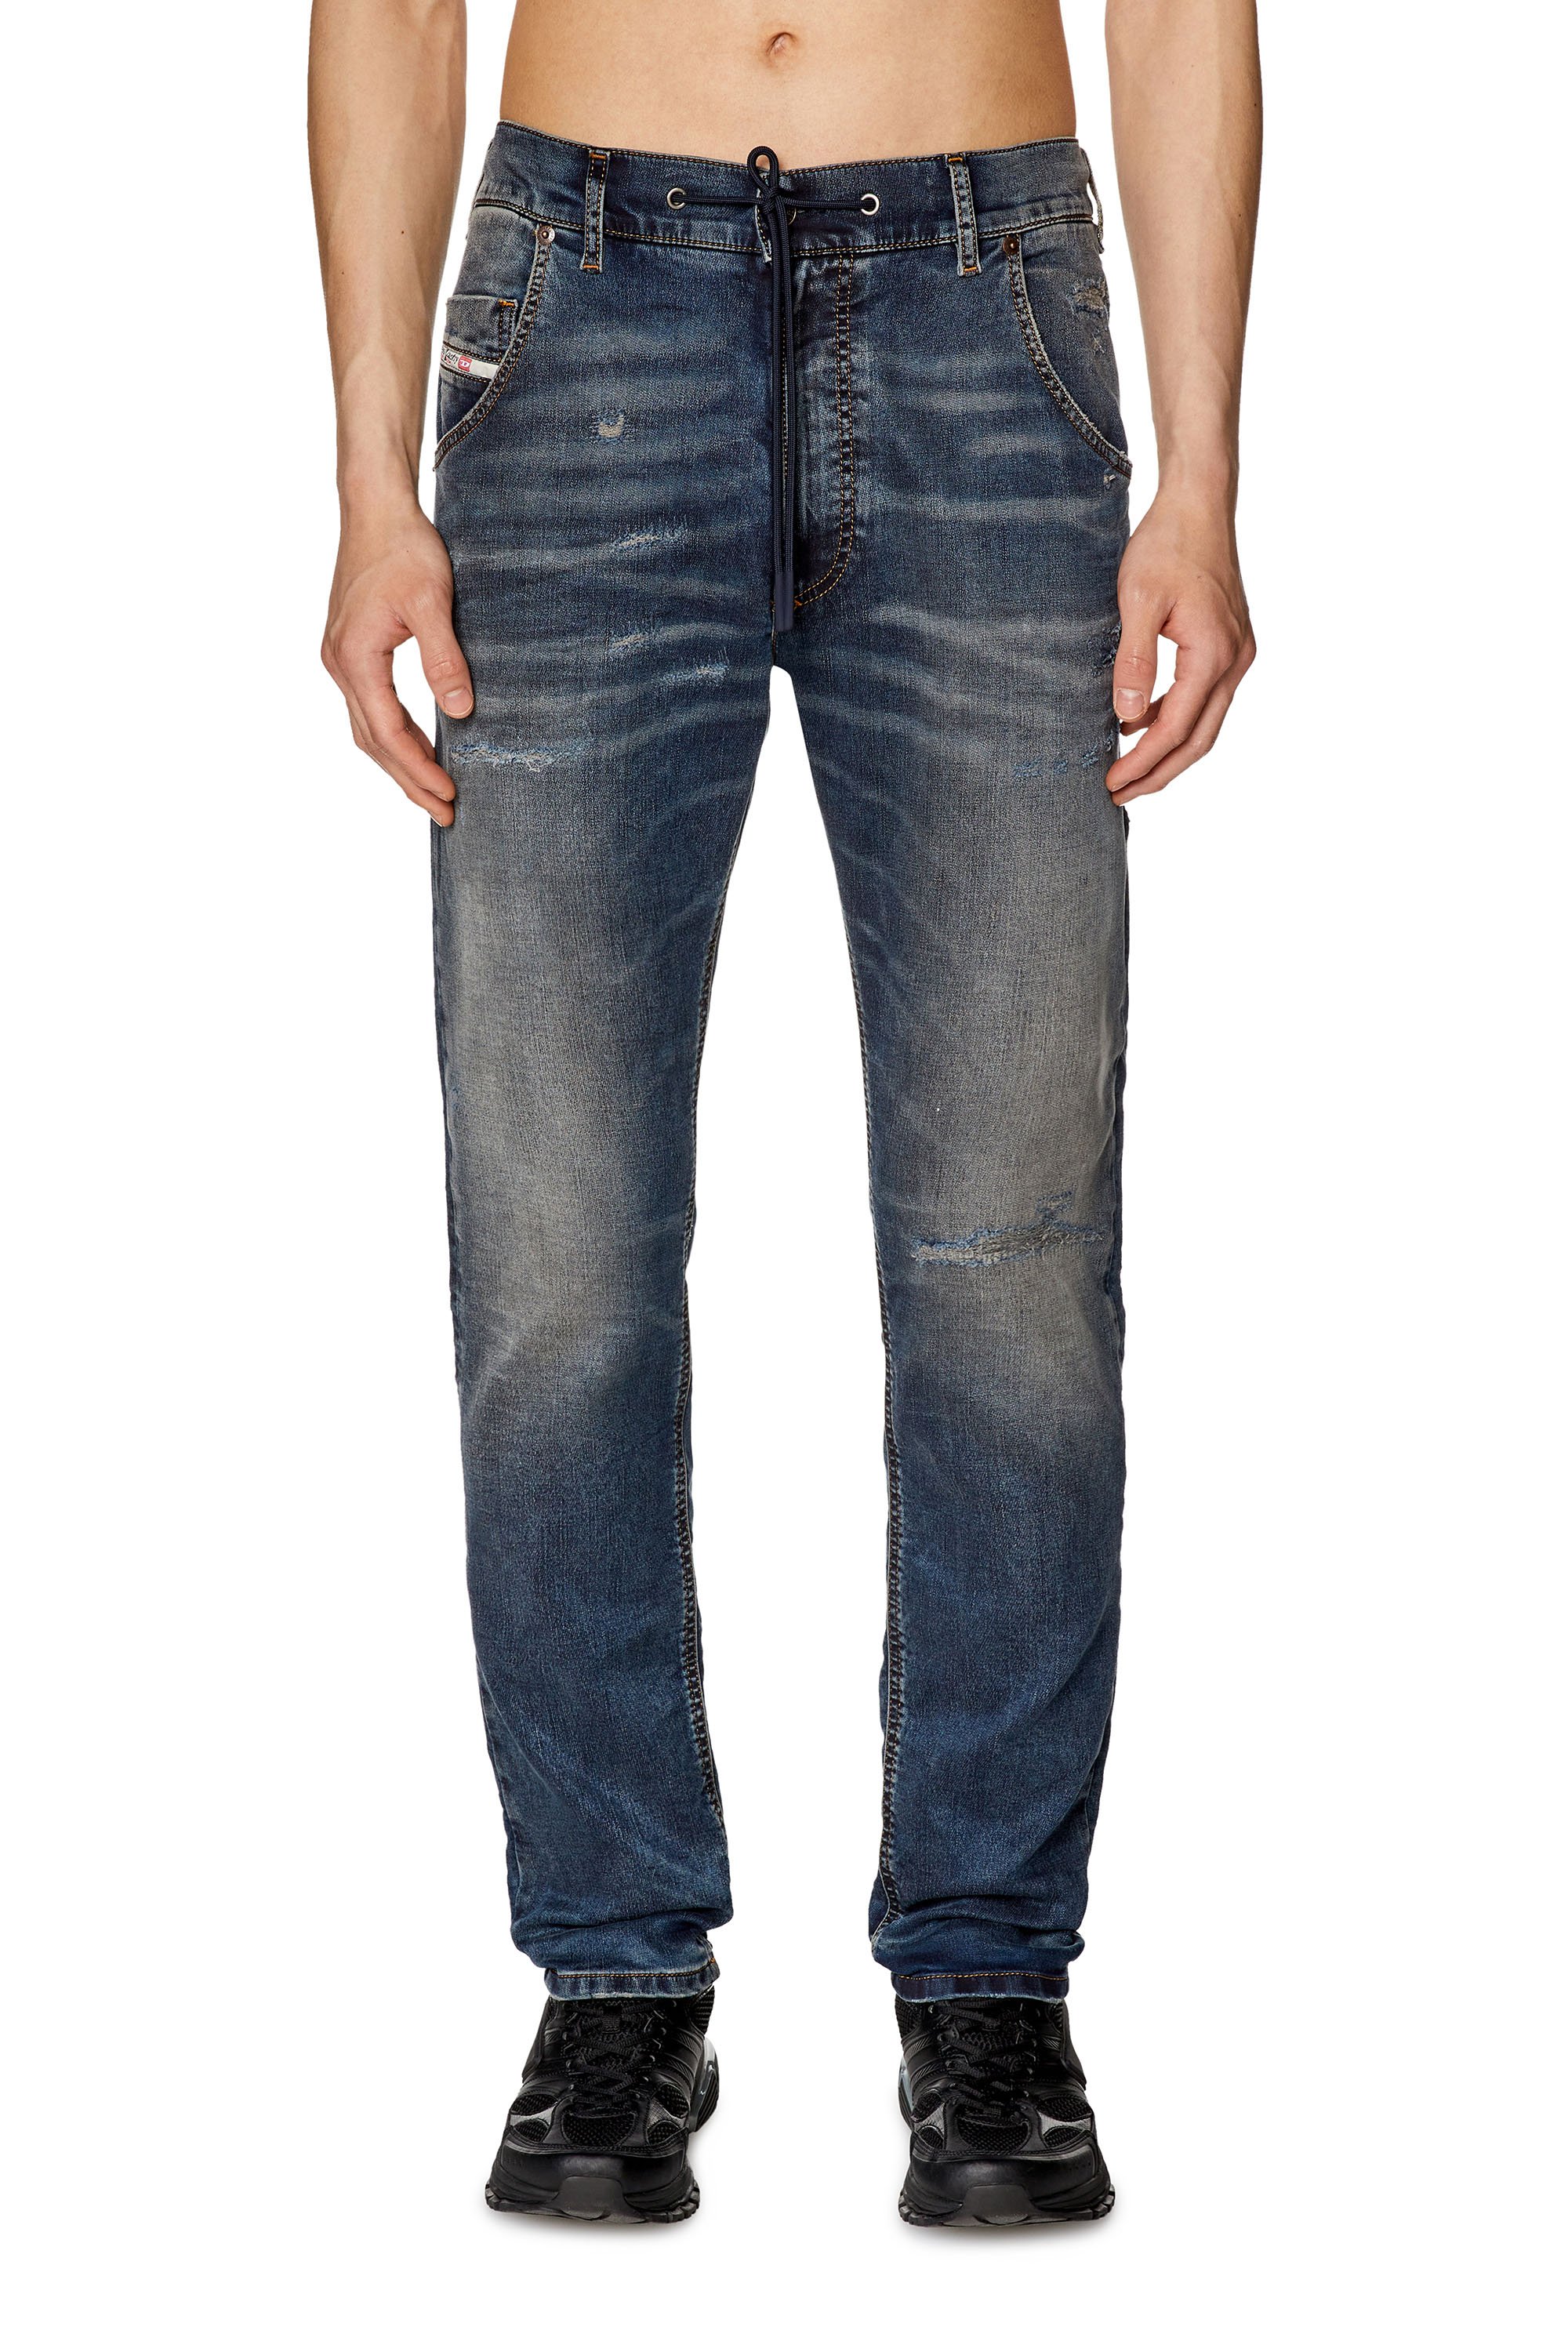 Men's Tapered Jeans | Dark blue | Diesel 2030 D-Krooley Joggjeans®